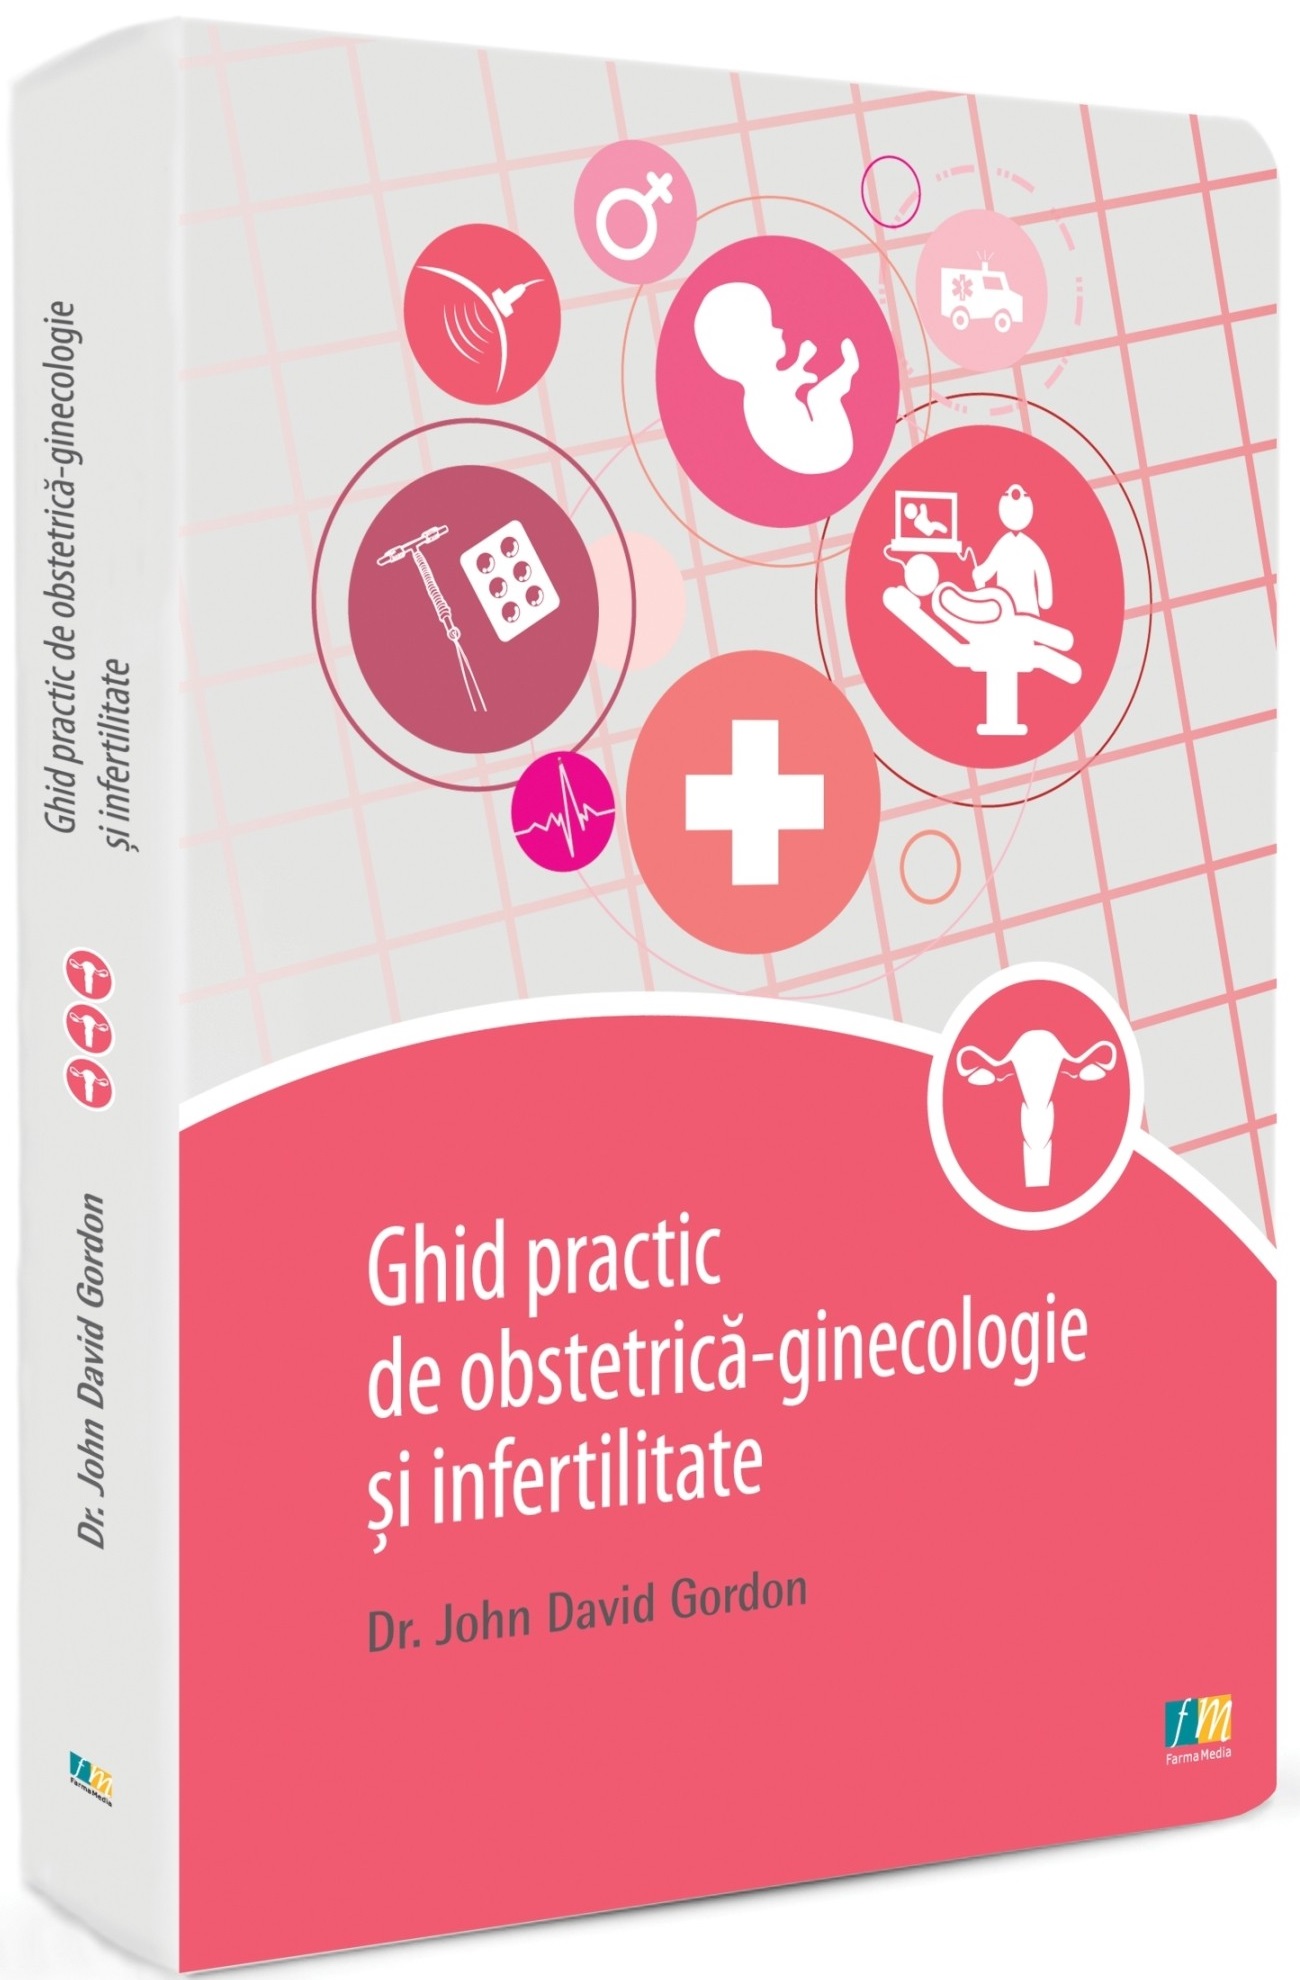 Ghid practic de obstetrica-ginecologie si infertilitate | John David Gordon carturesti.ro poza bestsellers.ro